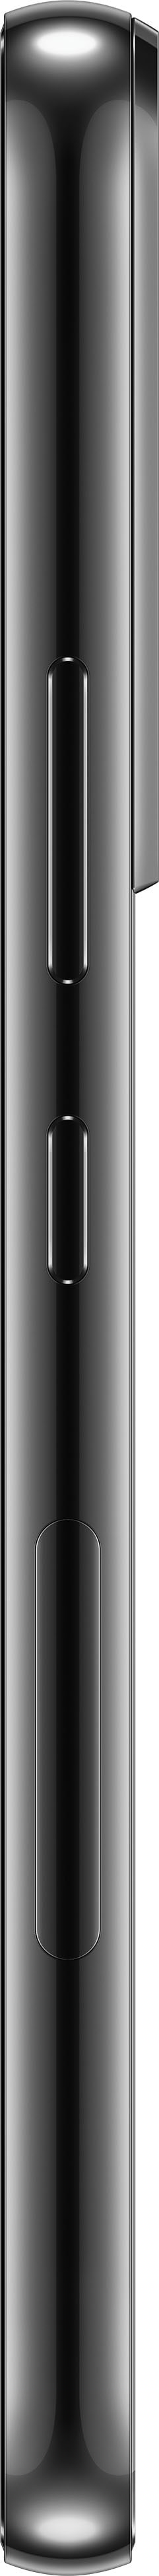 Samsung - Galaxy S22 128GB - Phantom Black (Verizon)_6